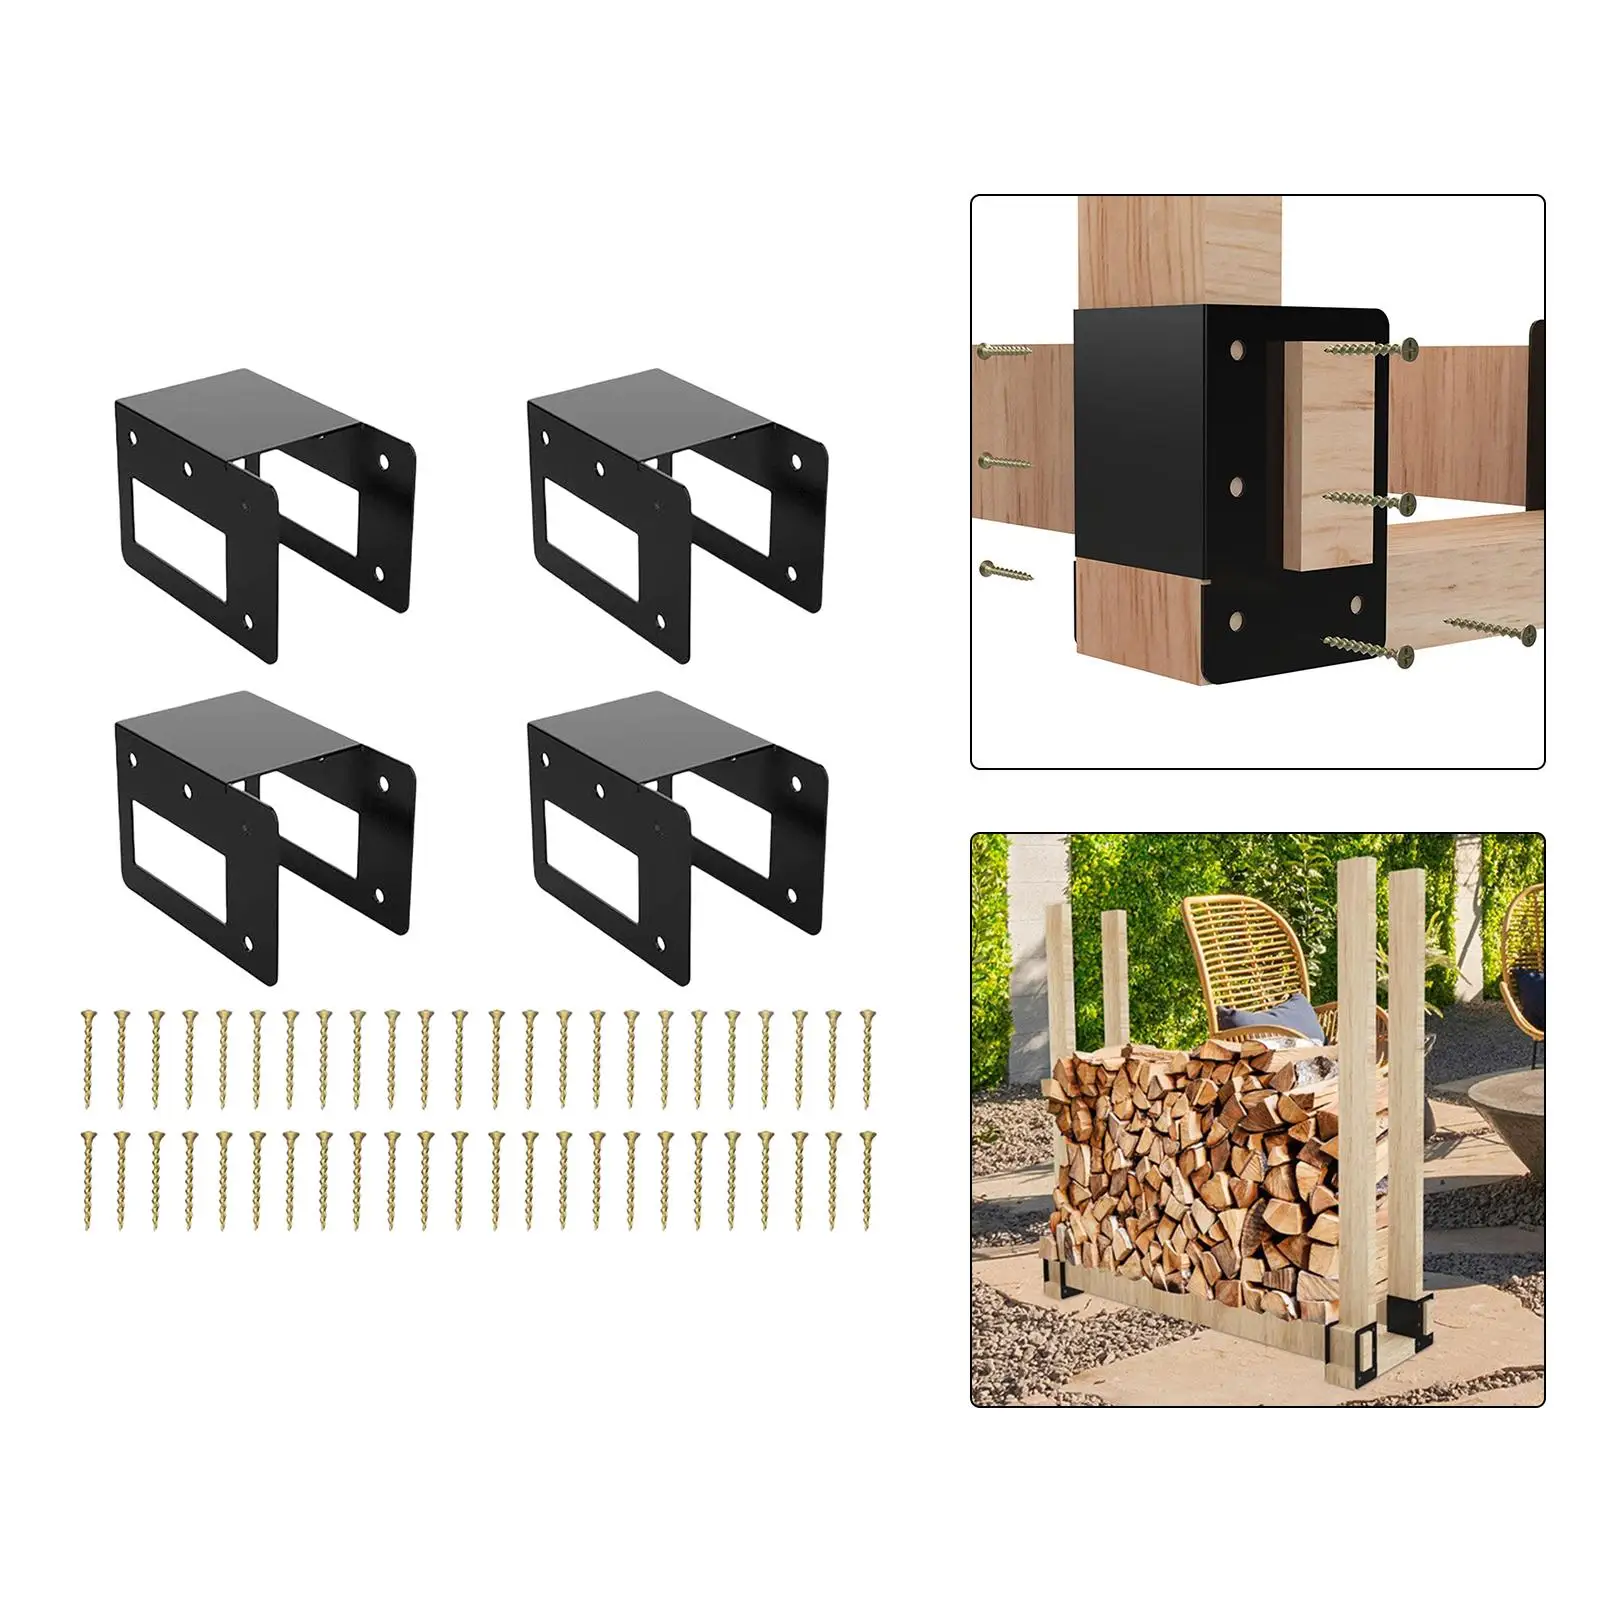 Log Rack Storage Wood Storage Holder Organizer Outdoor Indoor Firewood Bracket Kit for Home Carrying Wood Picnic Fishing Camping